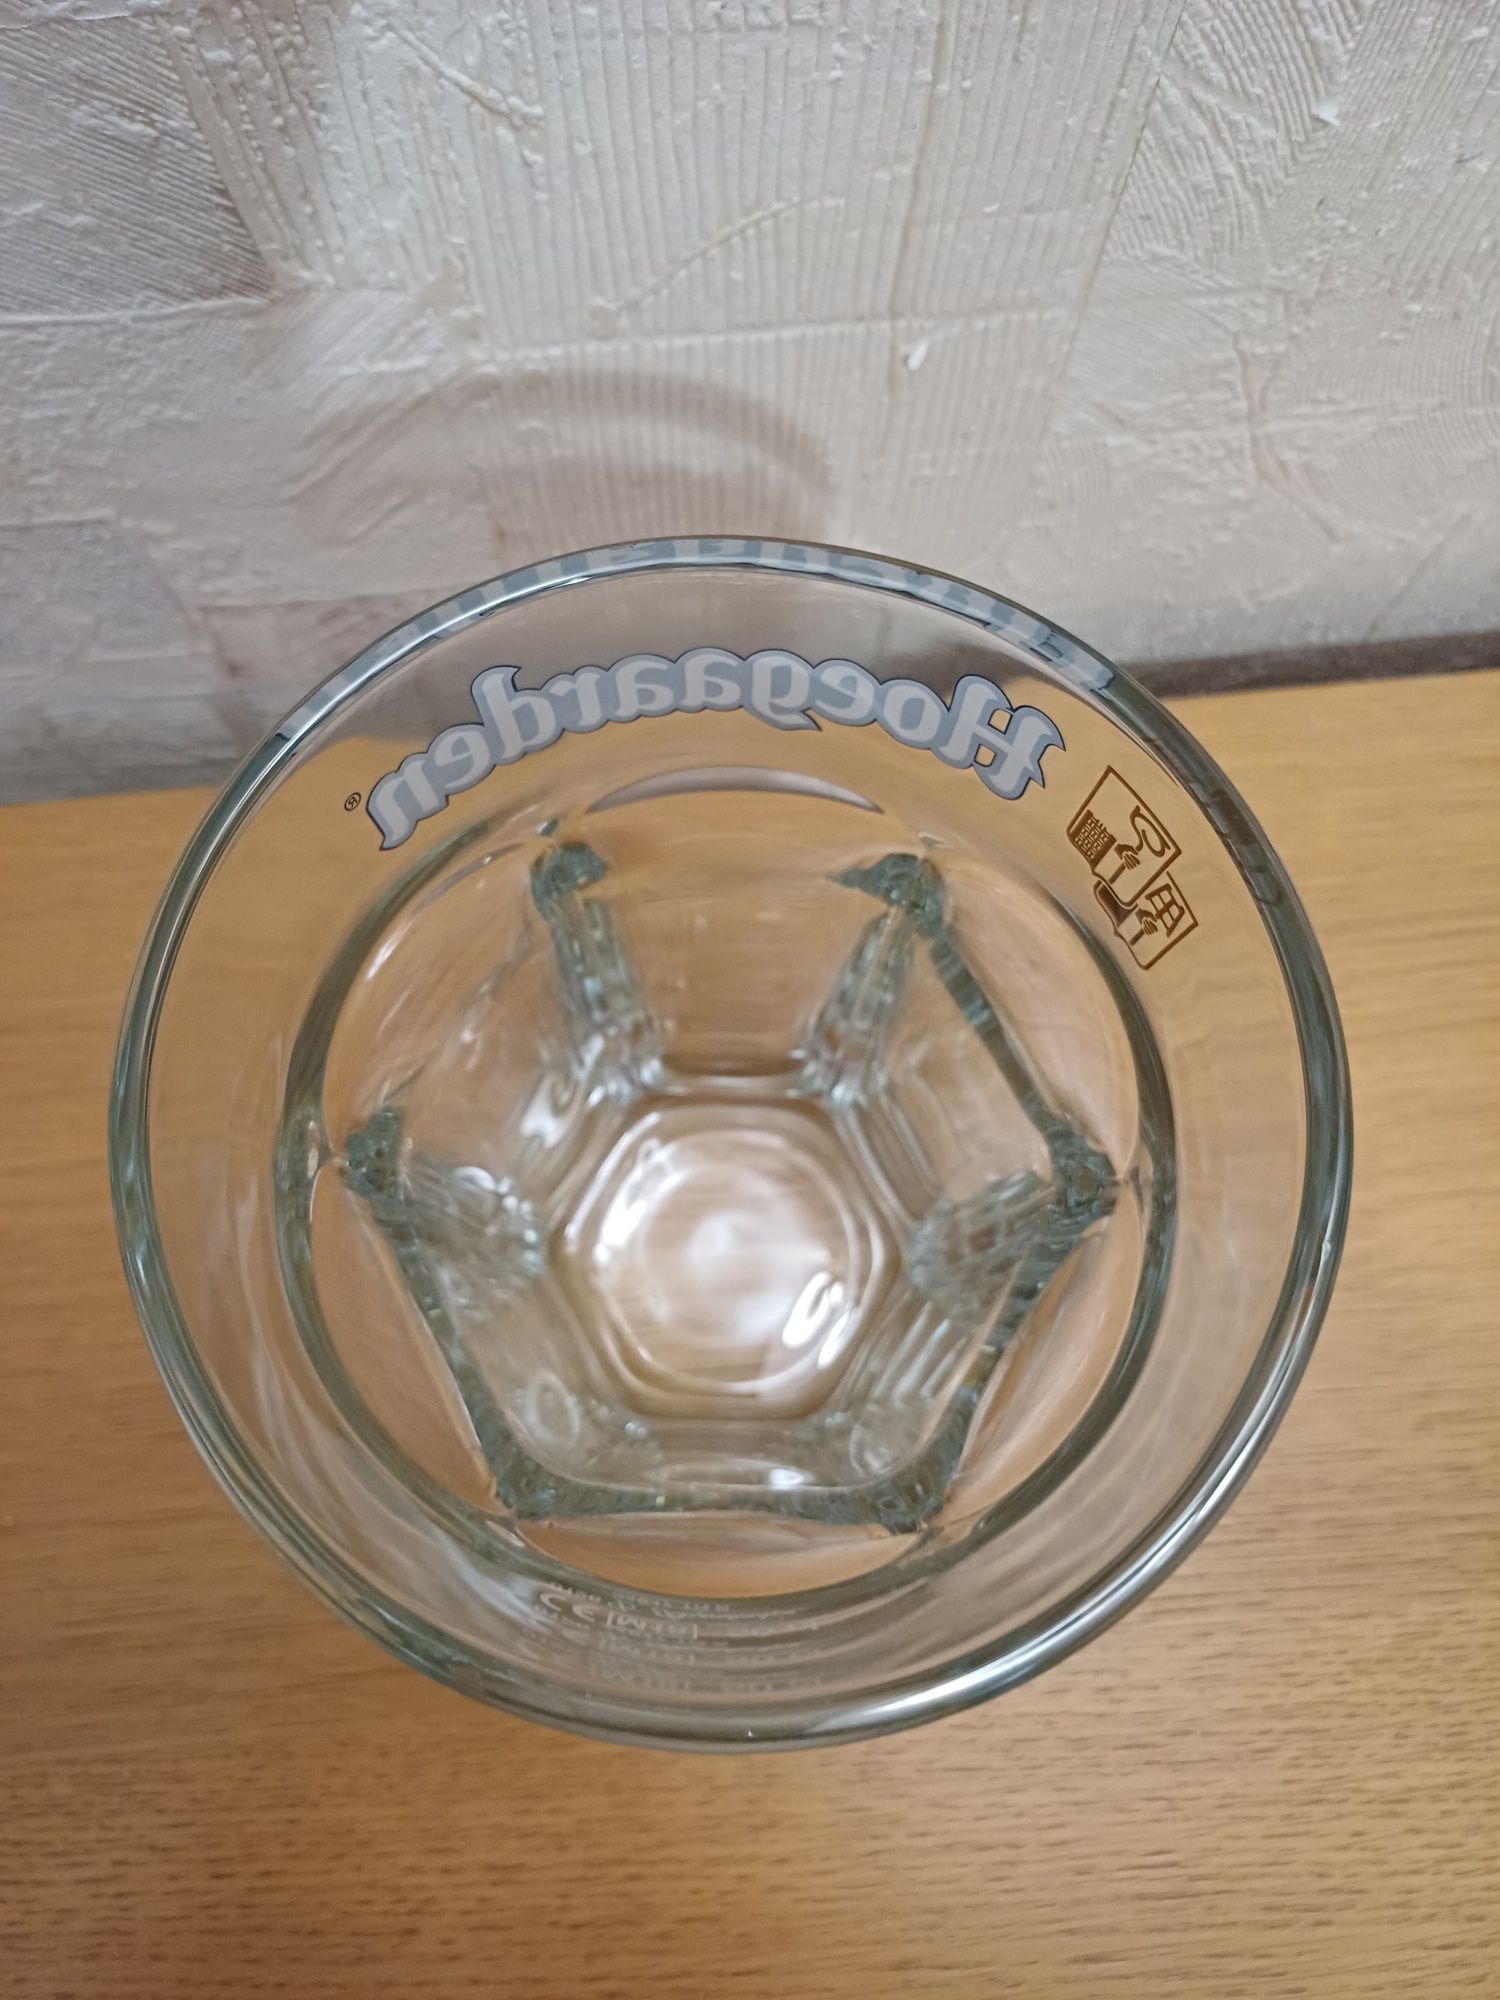 Пивной бокал Hoegaarden (Хугарден) 0,5 л